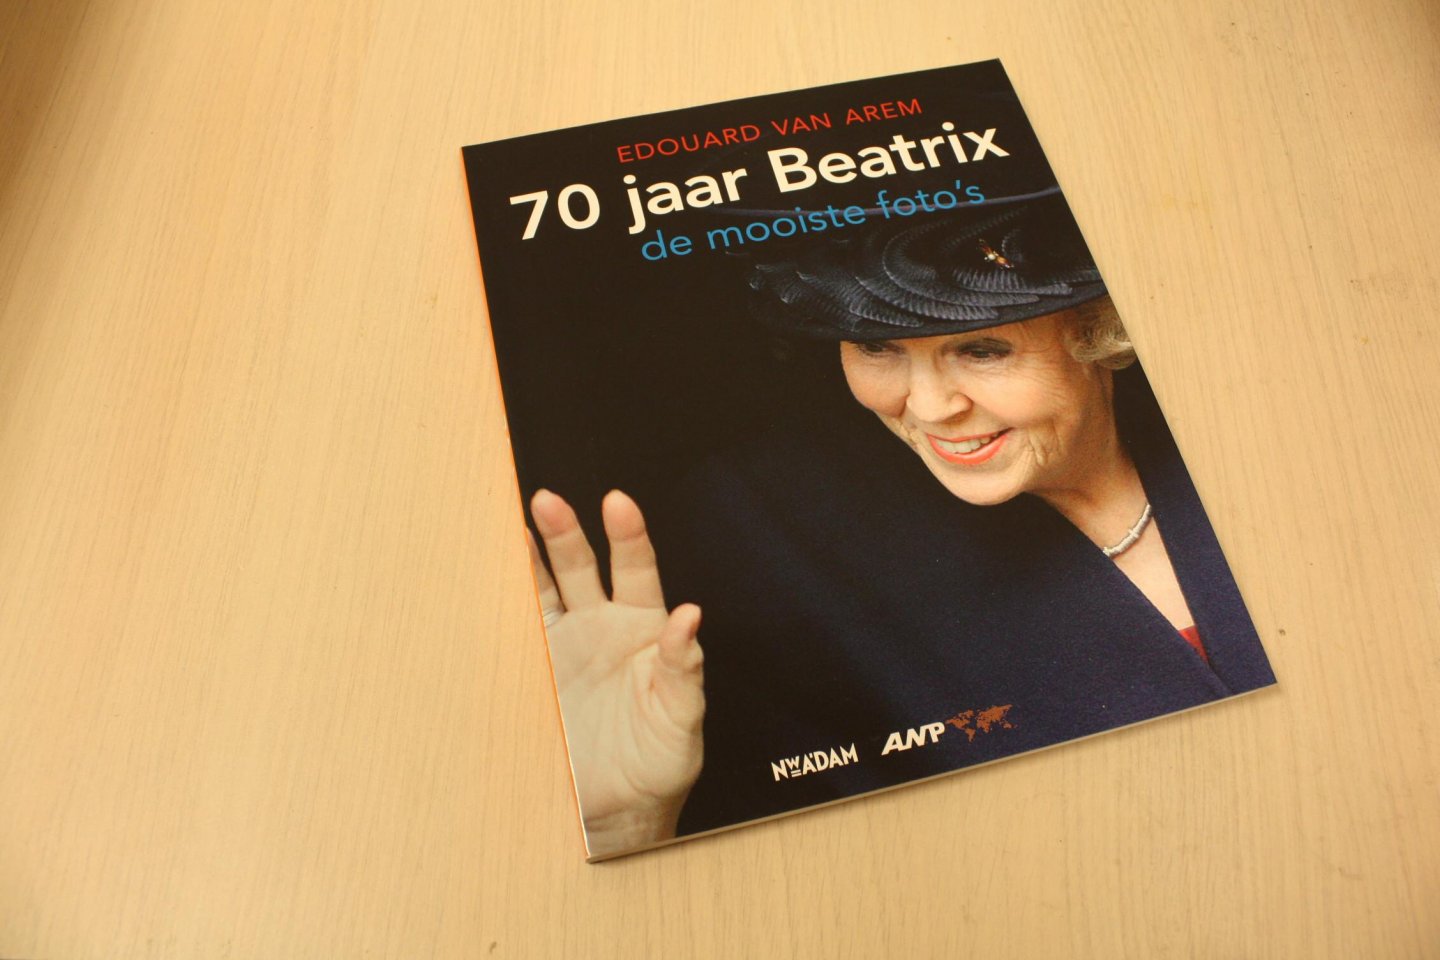 Arem, Edouard van - 70 jaar Beatrix / de mooiste portretten